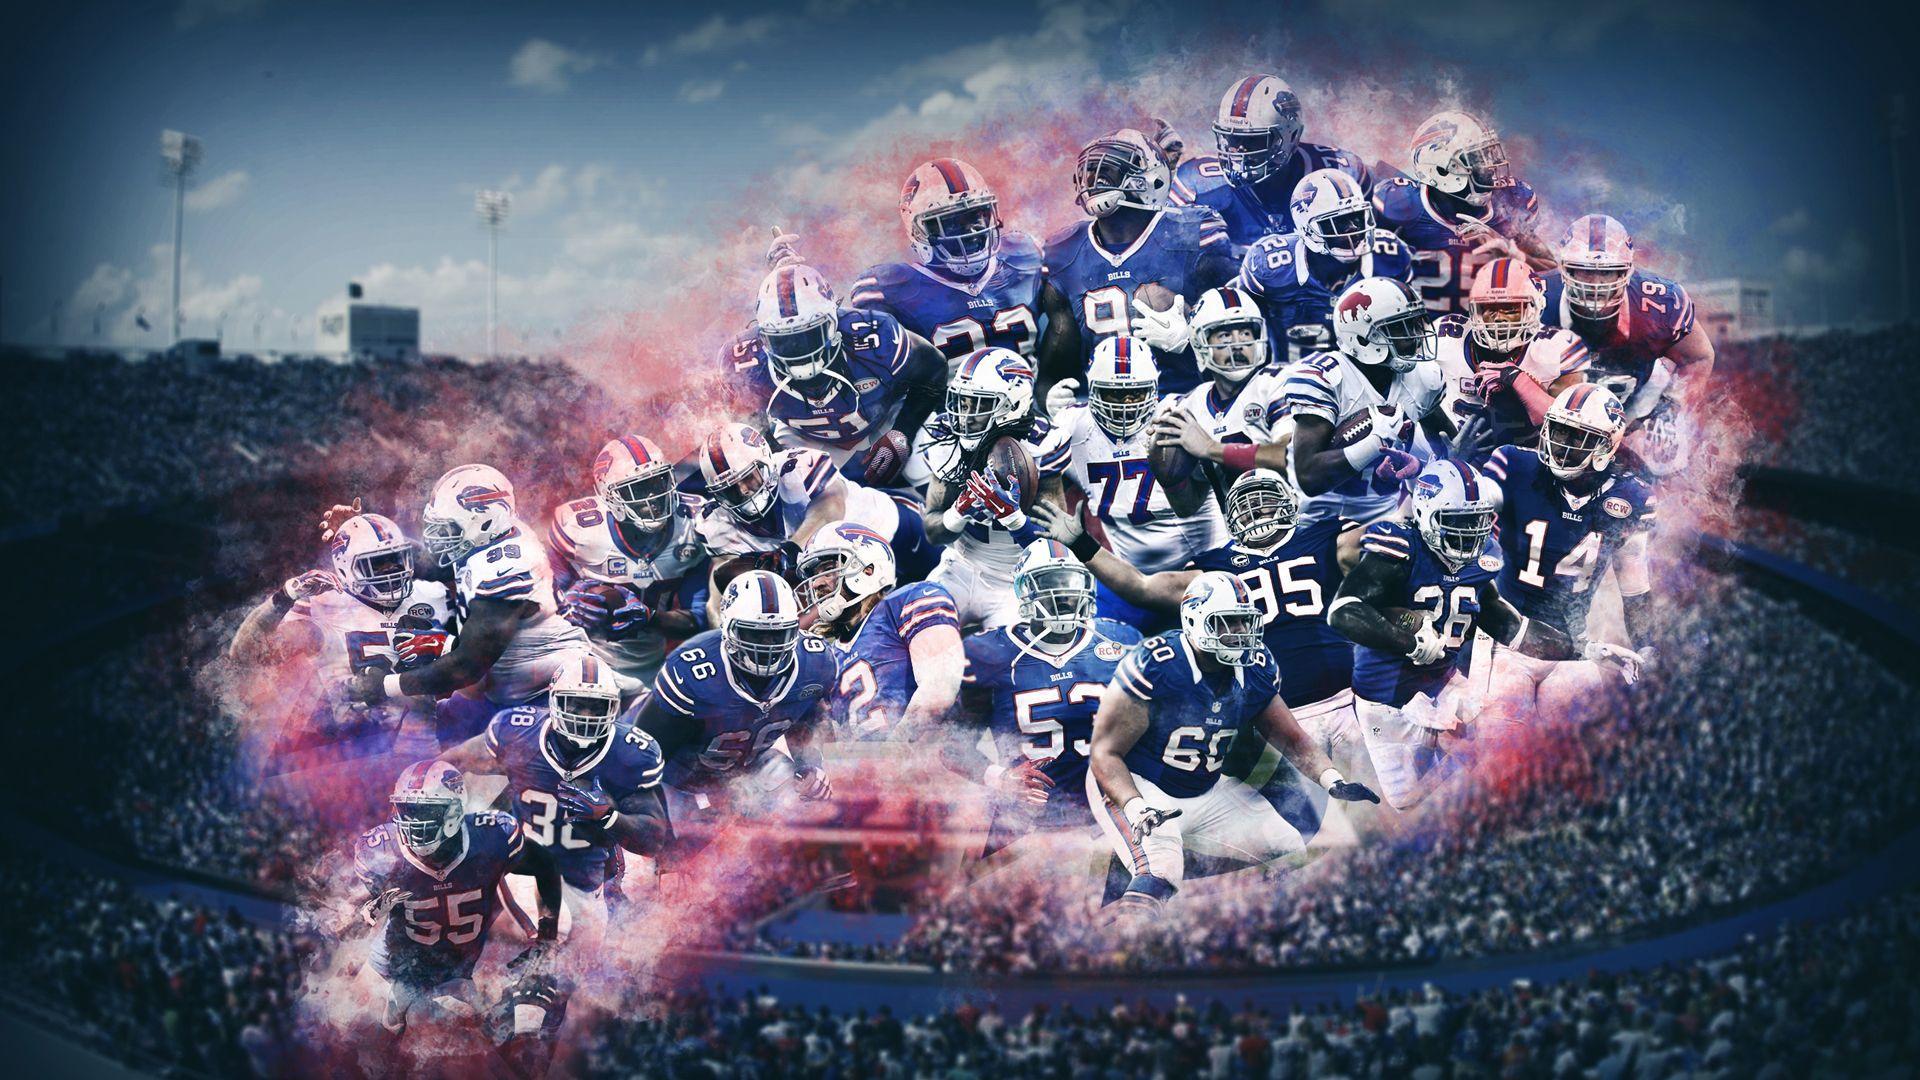 Buffalo Bills Wallpaper Image Photo Picture Background